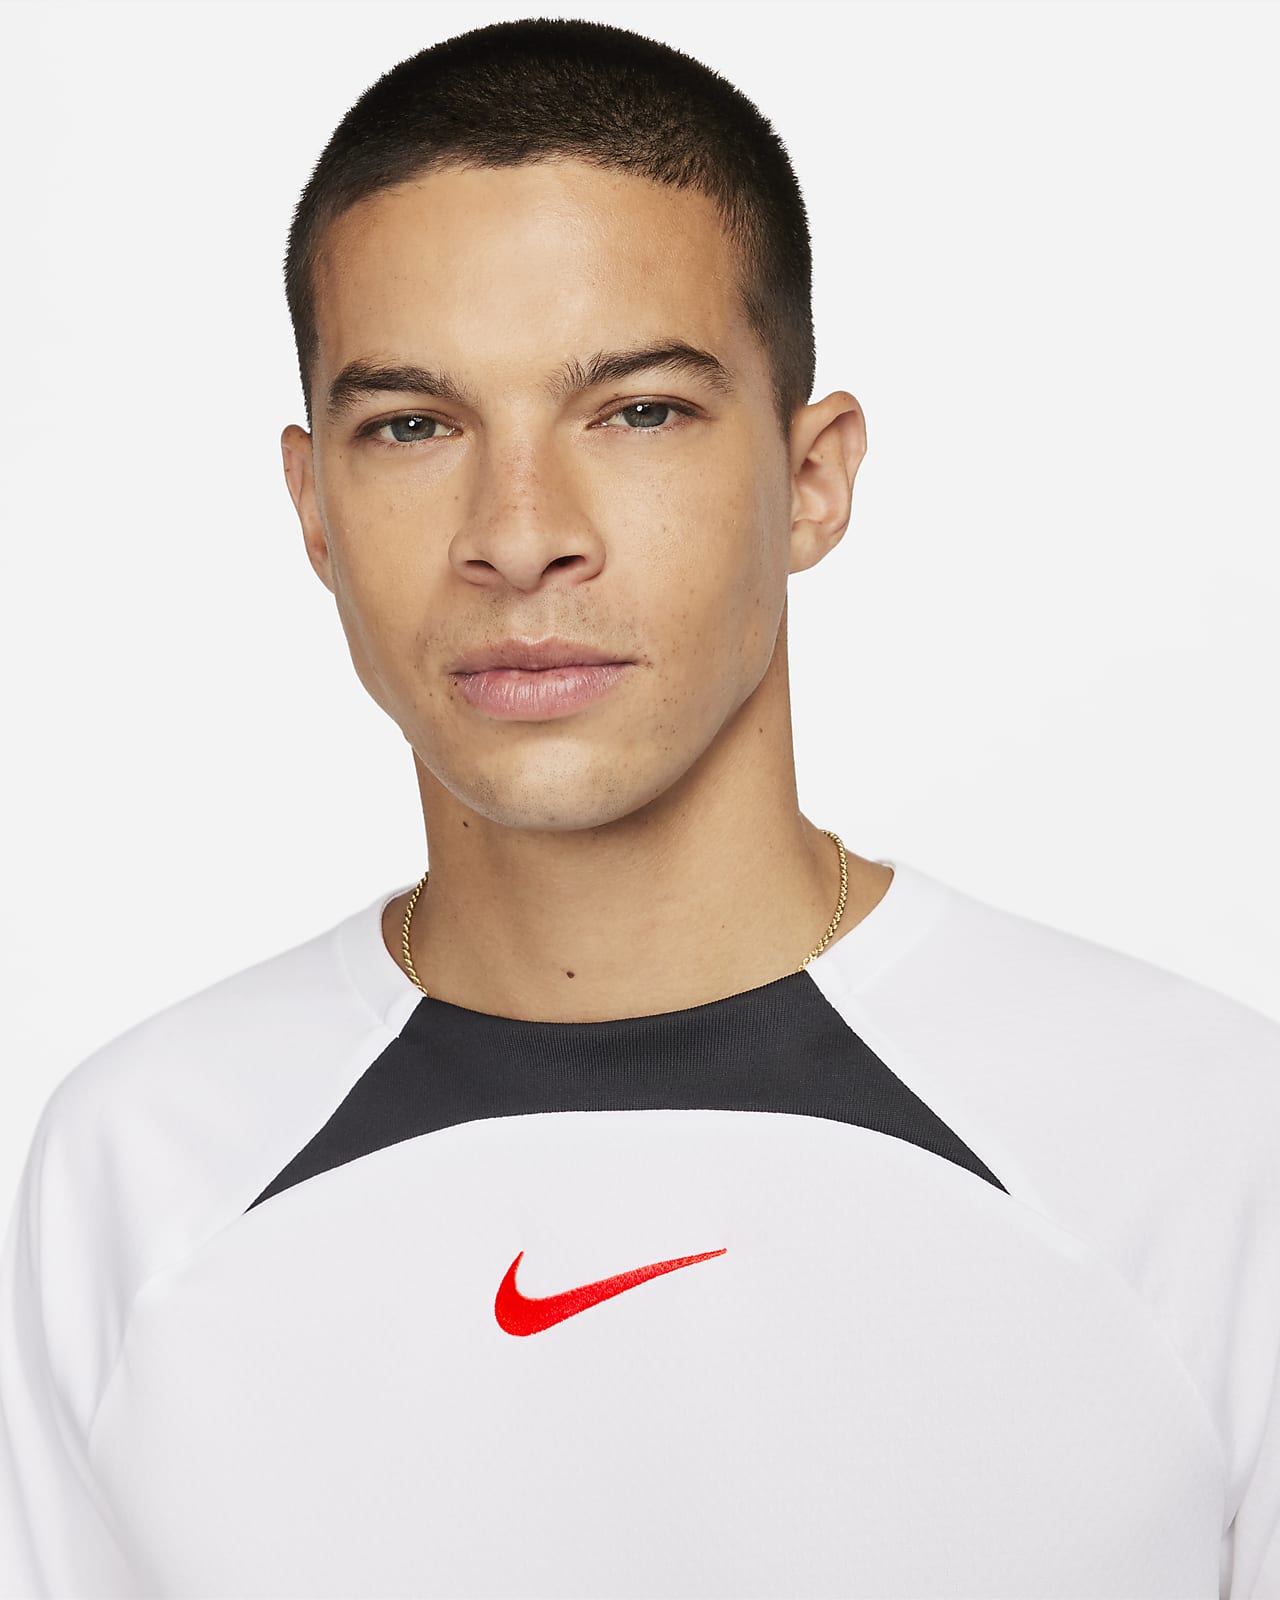 Nike Academy Men's Dri-FIT Football Short-Sleeve Top. Nike LU